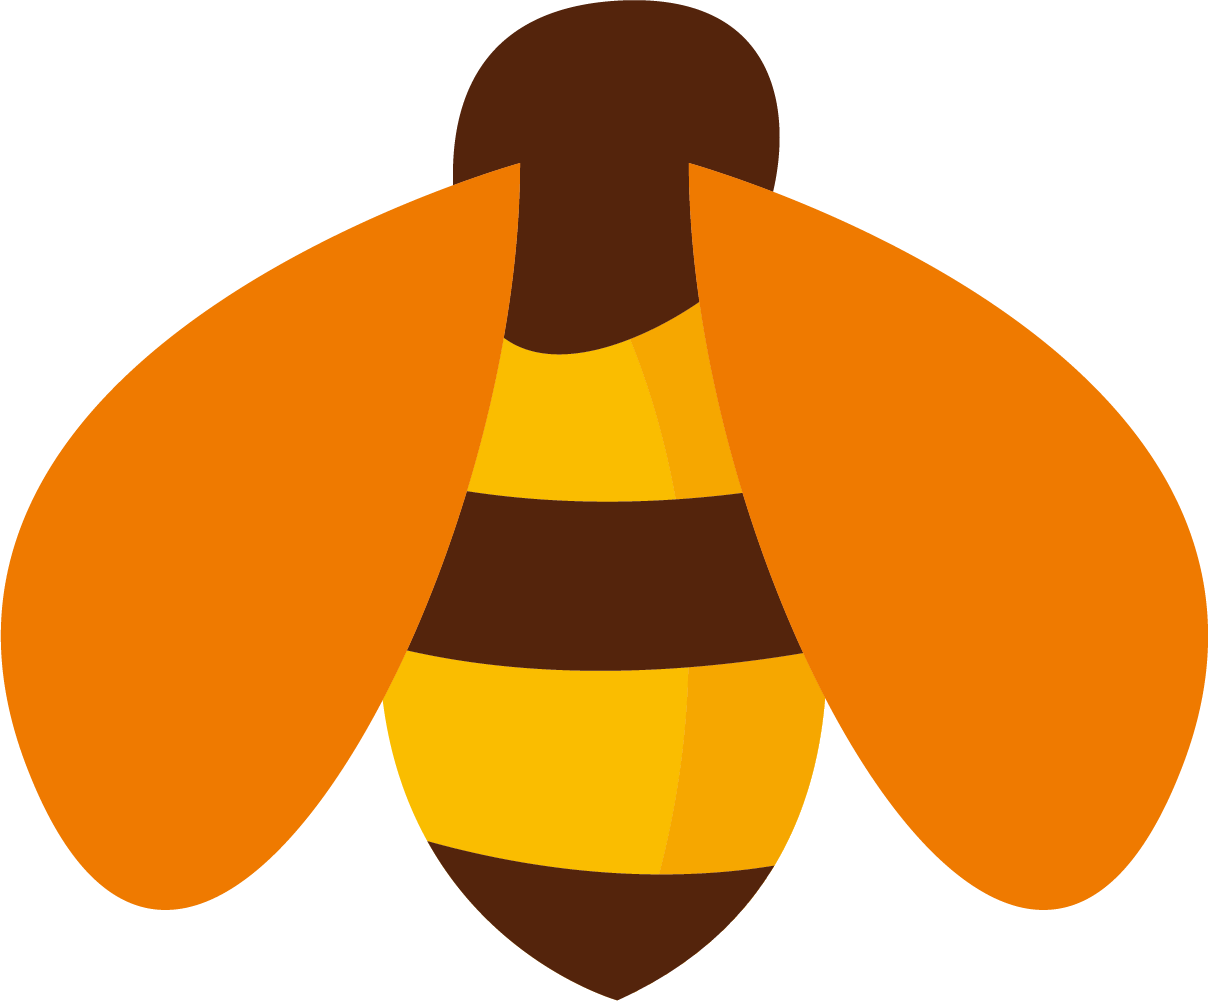 Apitoxin Apidae Honey Bee - Apitoxin (1208x1001)